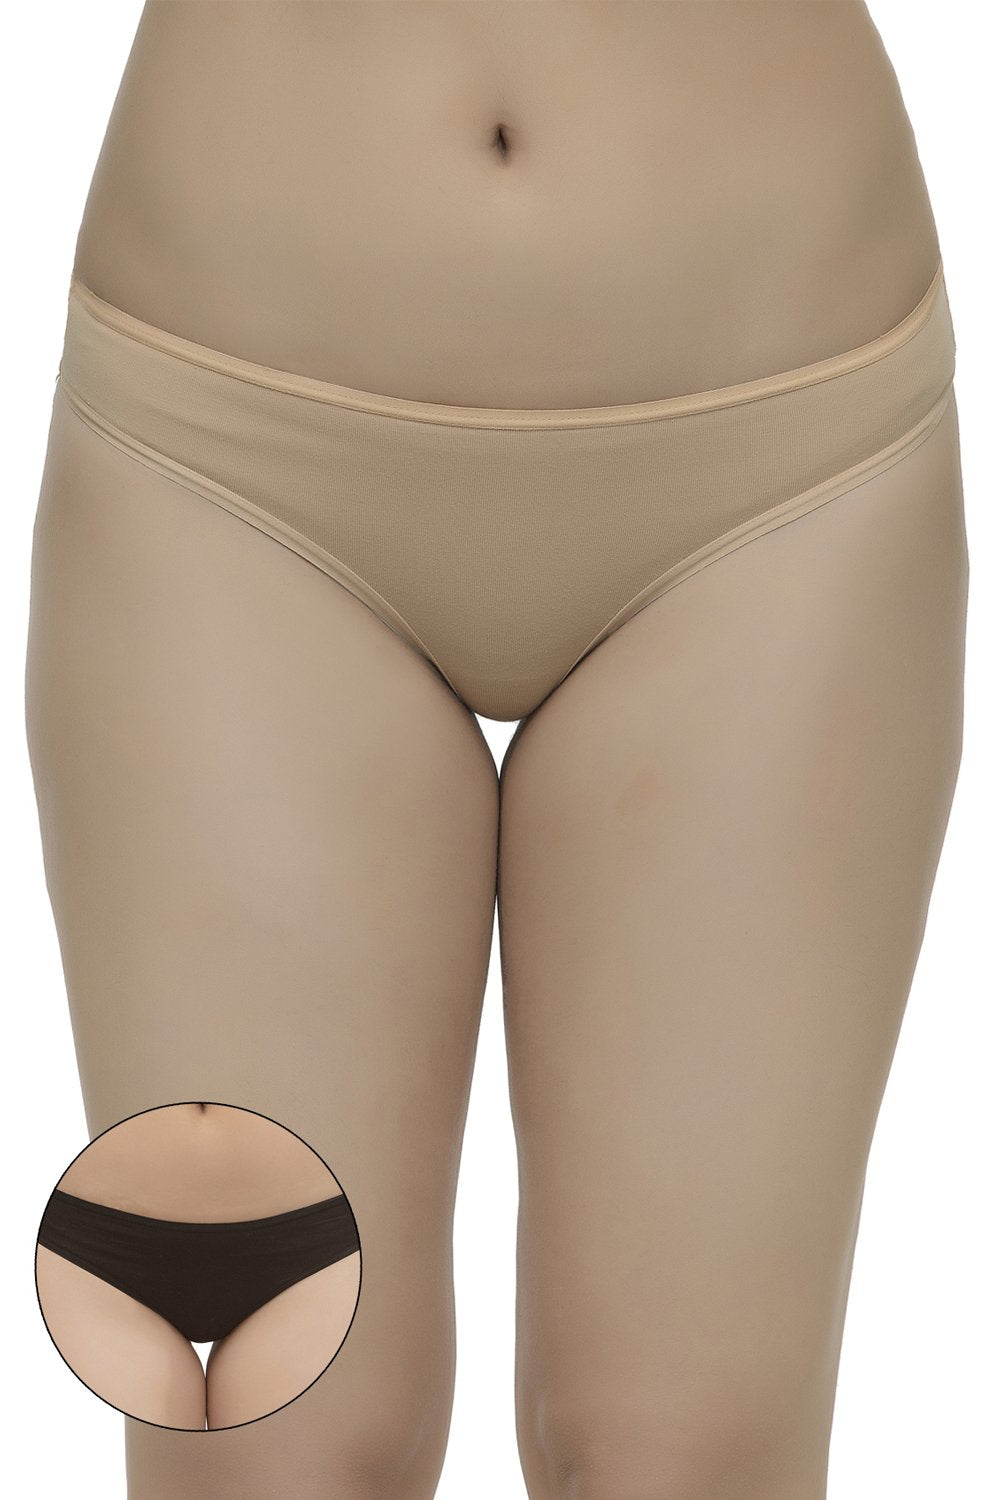 Essentials Women's Seamless Bonded Stretch Thong Underwear, Pack of 4